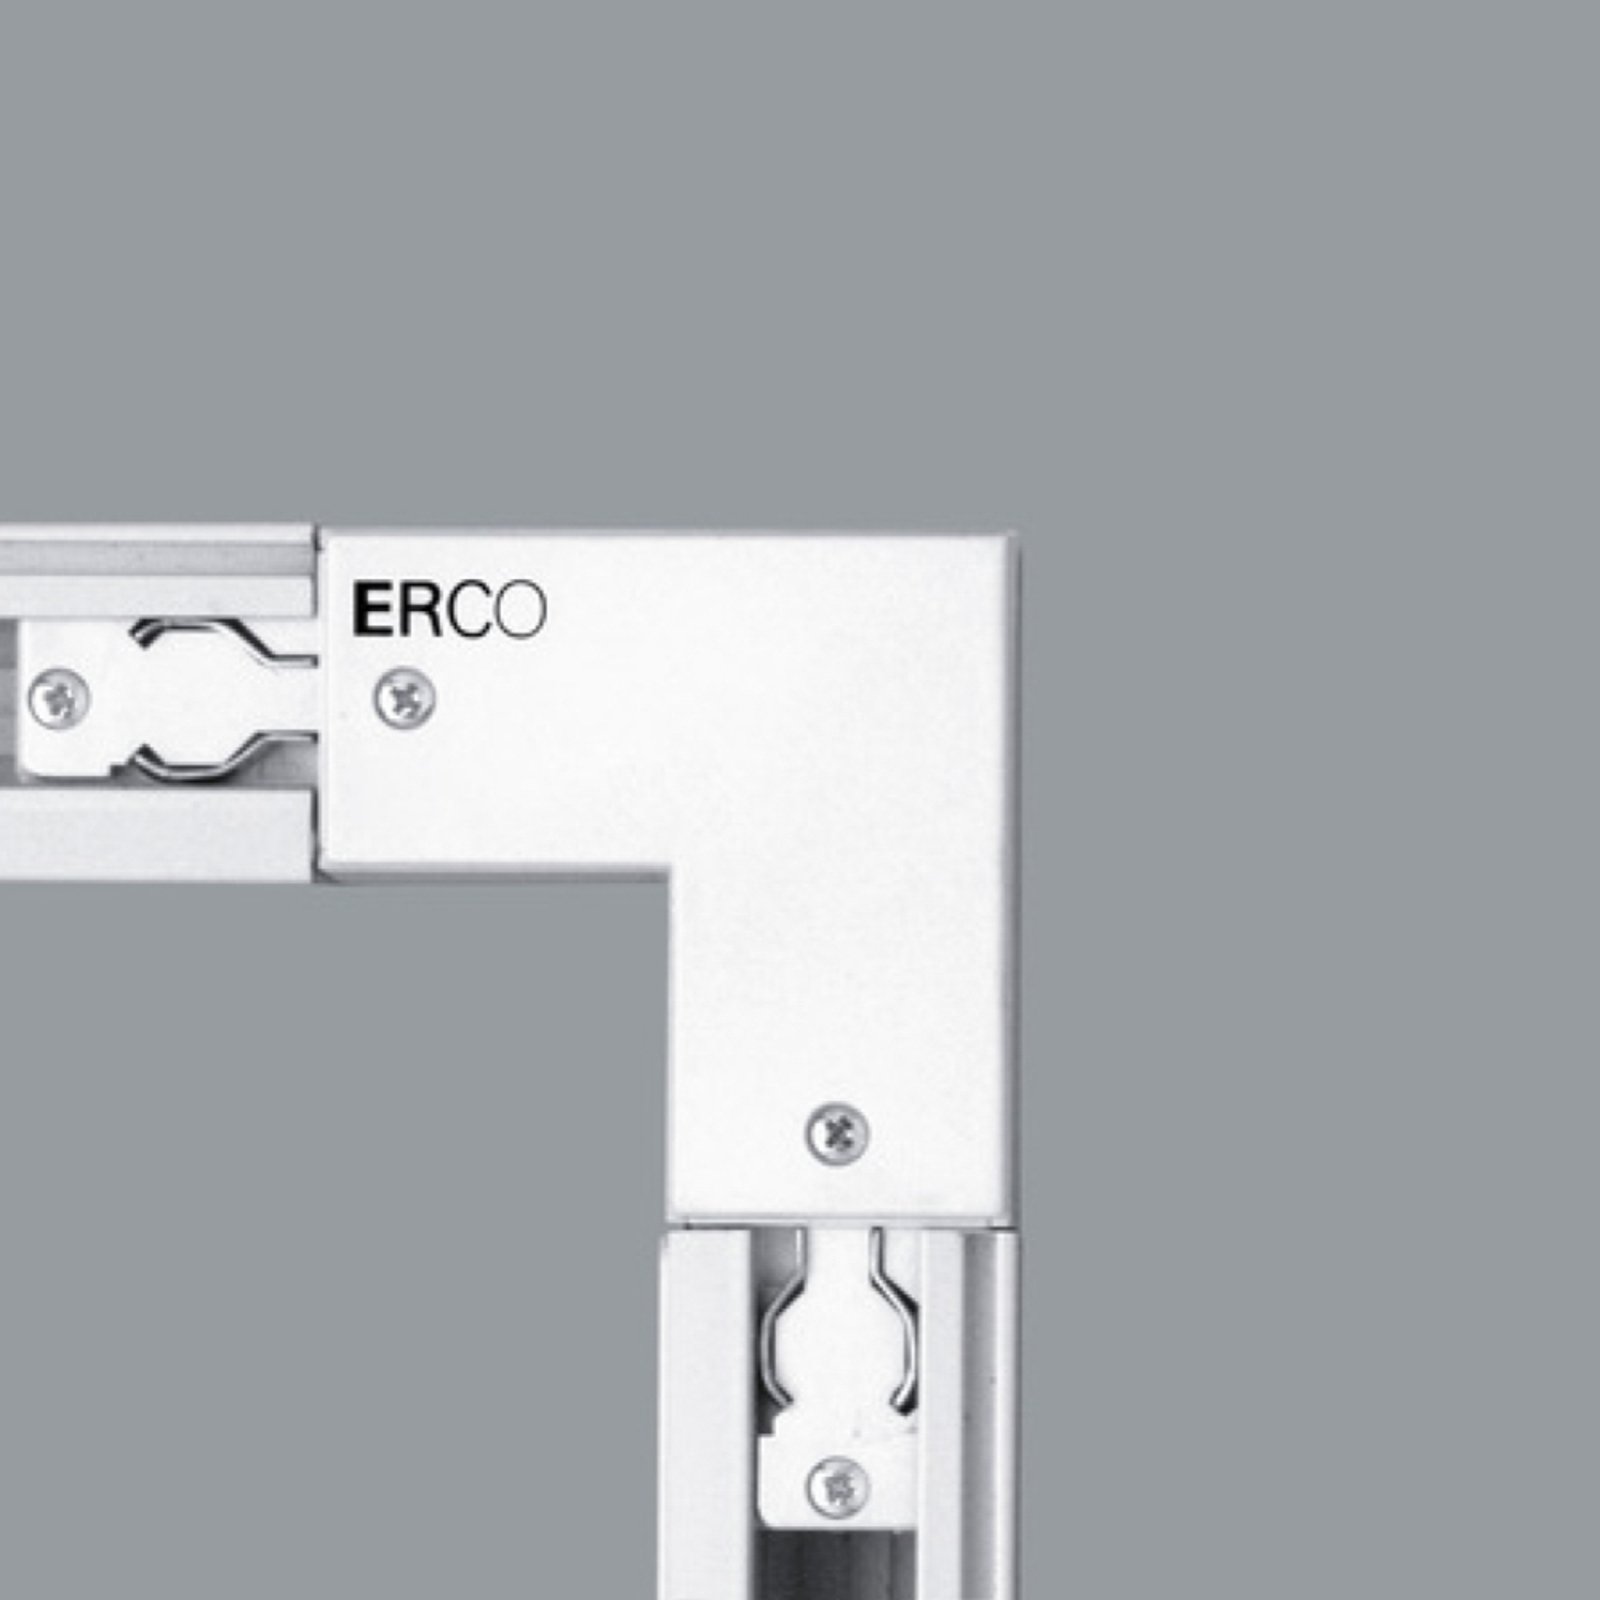 ERCO 3-fase-hoekverbinder aardedraad buiten, wit